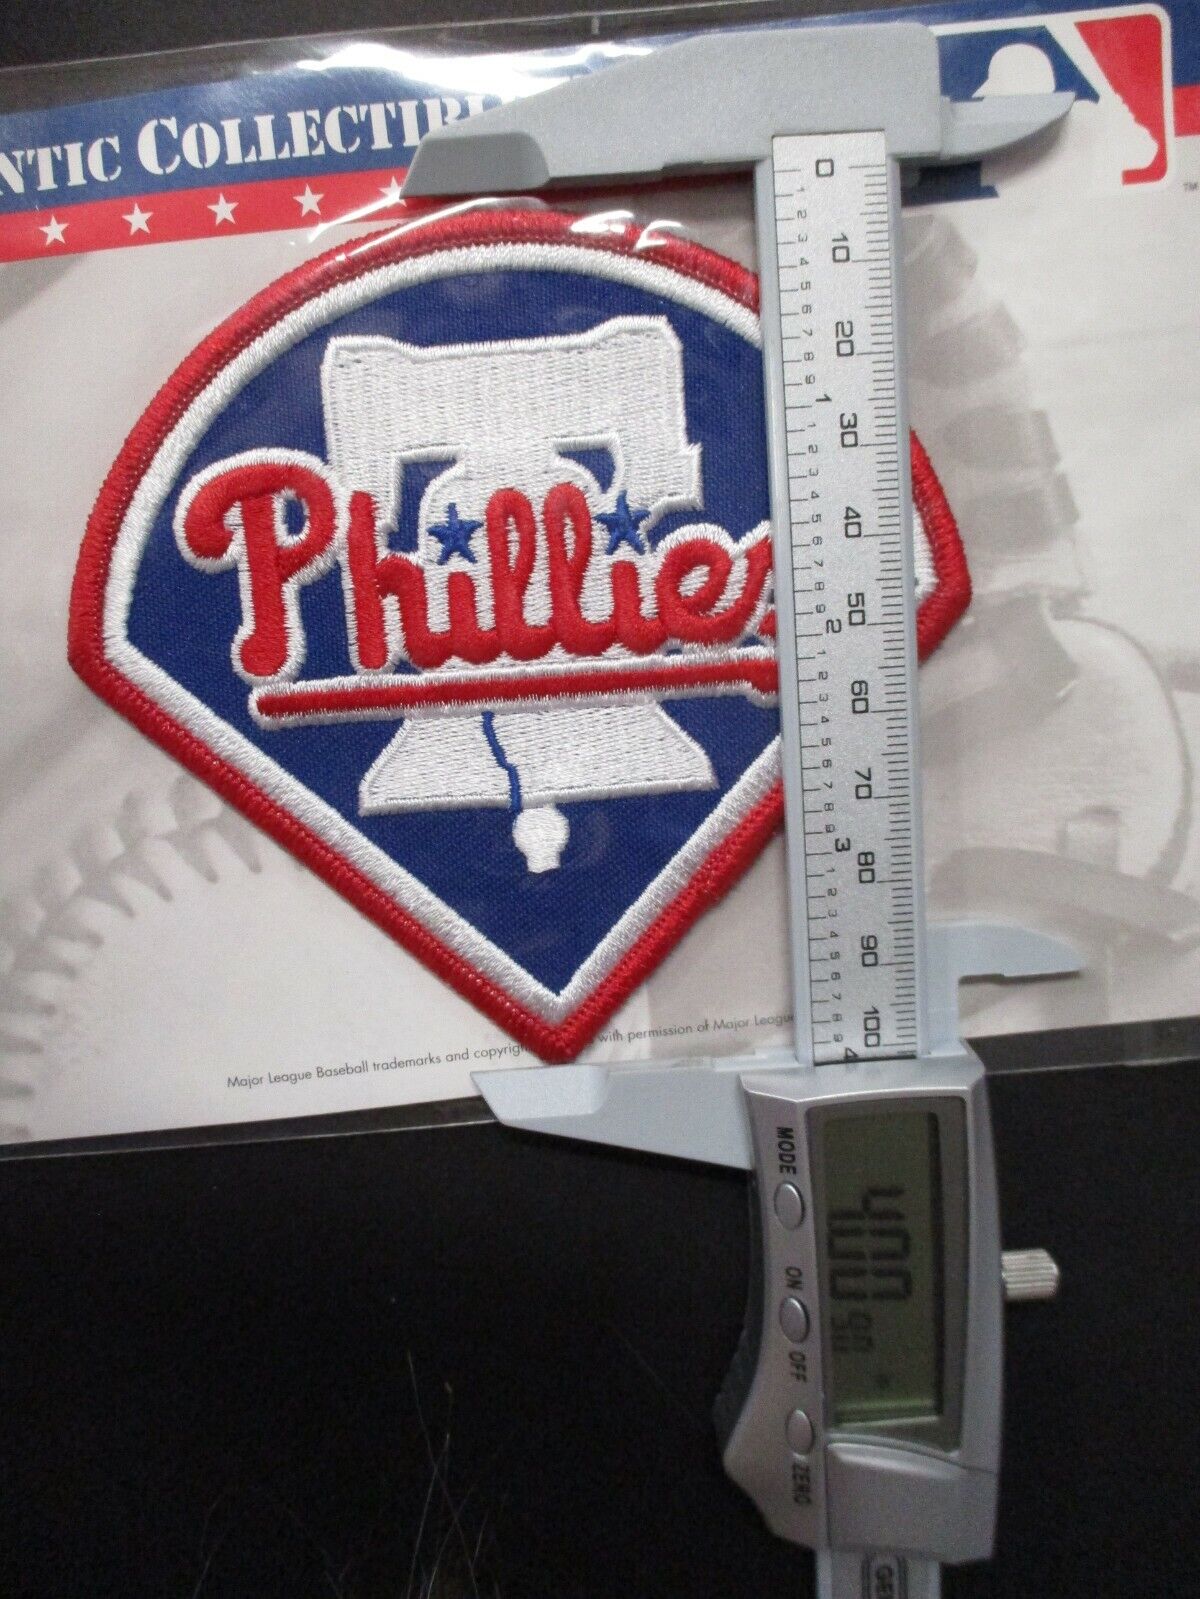 Philadelphia Phillies Authentic Collectible Emblem Patch Size 4 x 4.25 inches